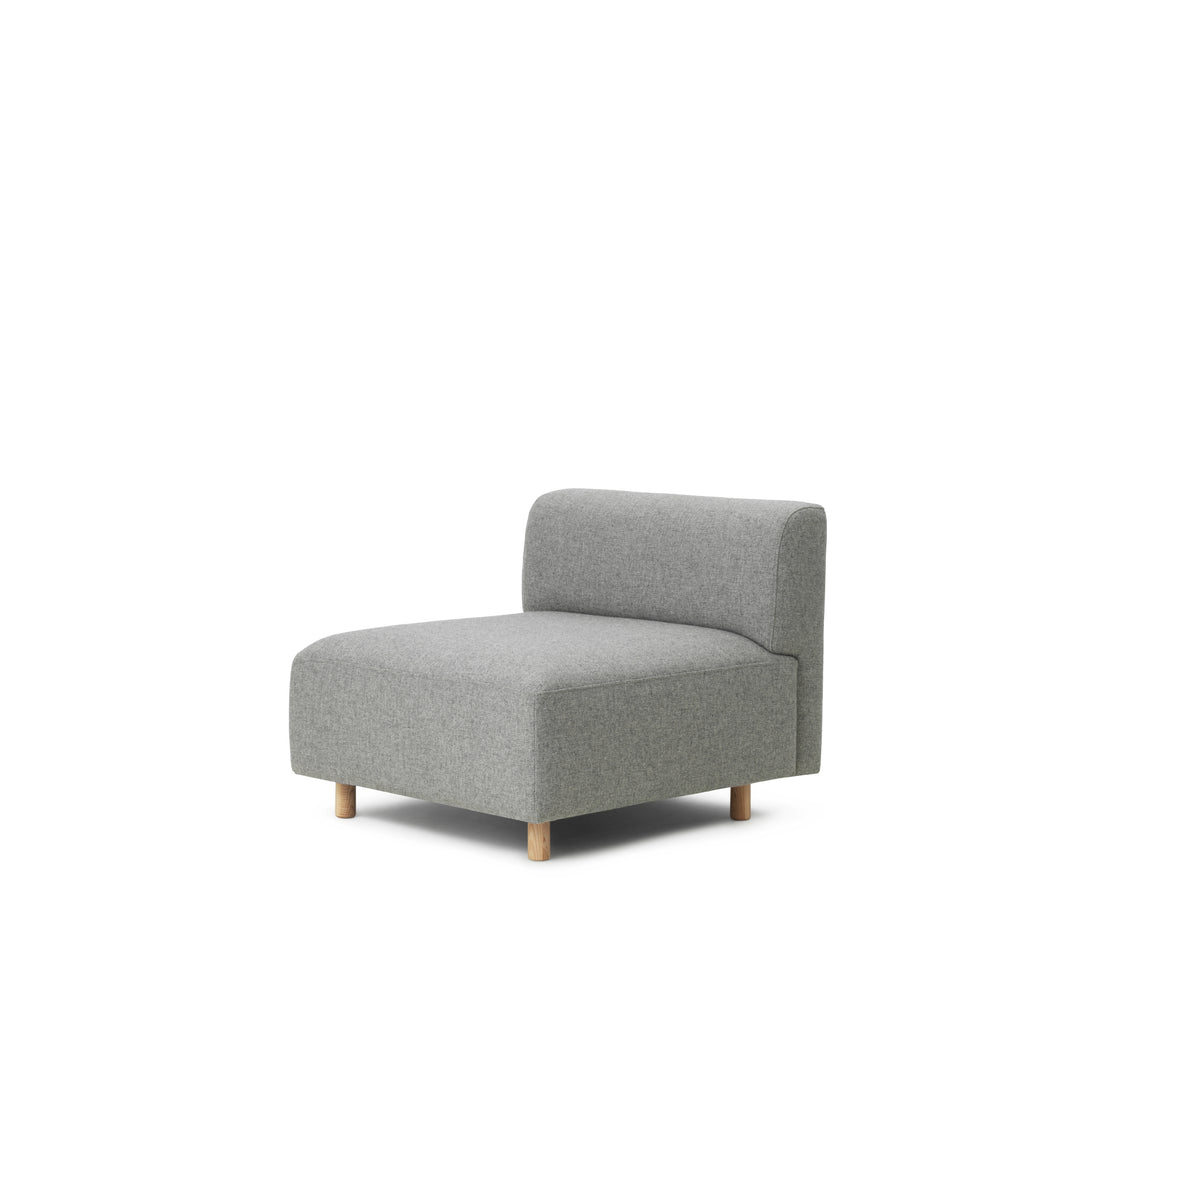 Redo Modular Sofa by Normann Copenhagen